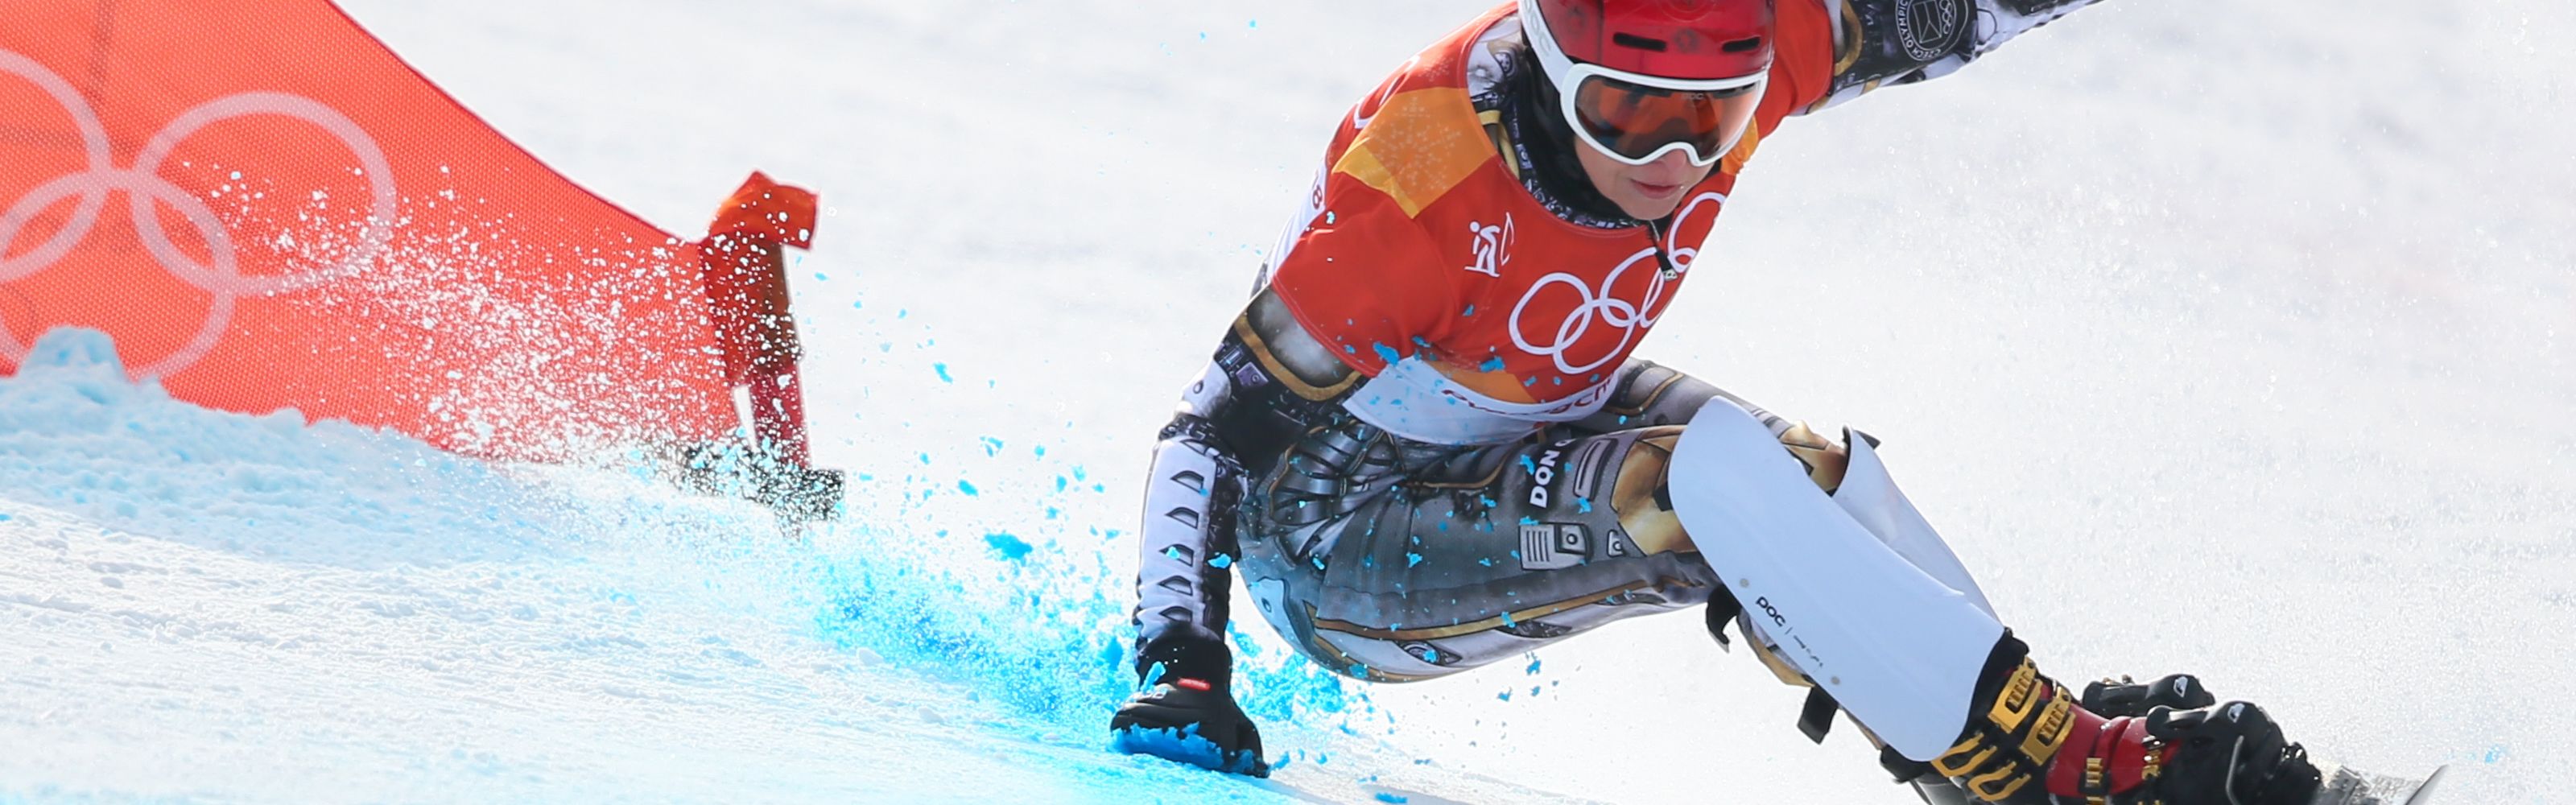 visie Ru De neiging hebben Ester Ledecka on Winter Olympic ski and snowboard gold | CNN